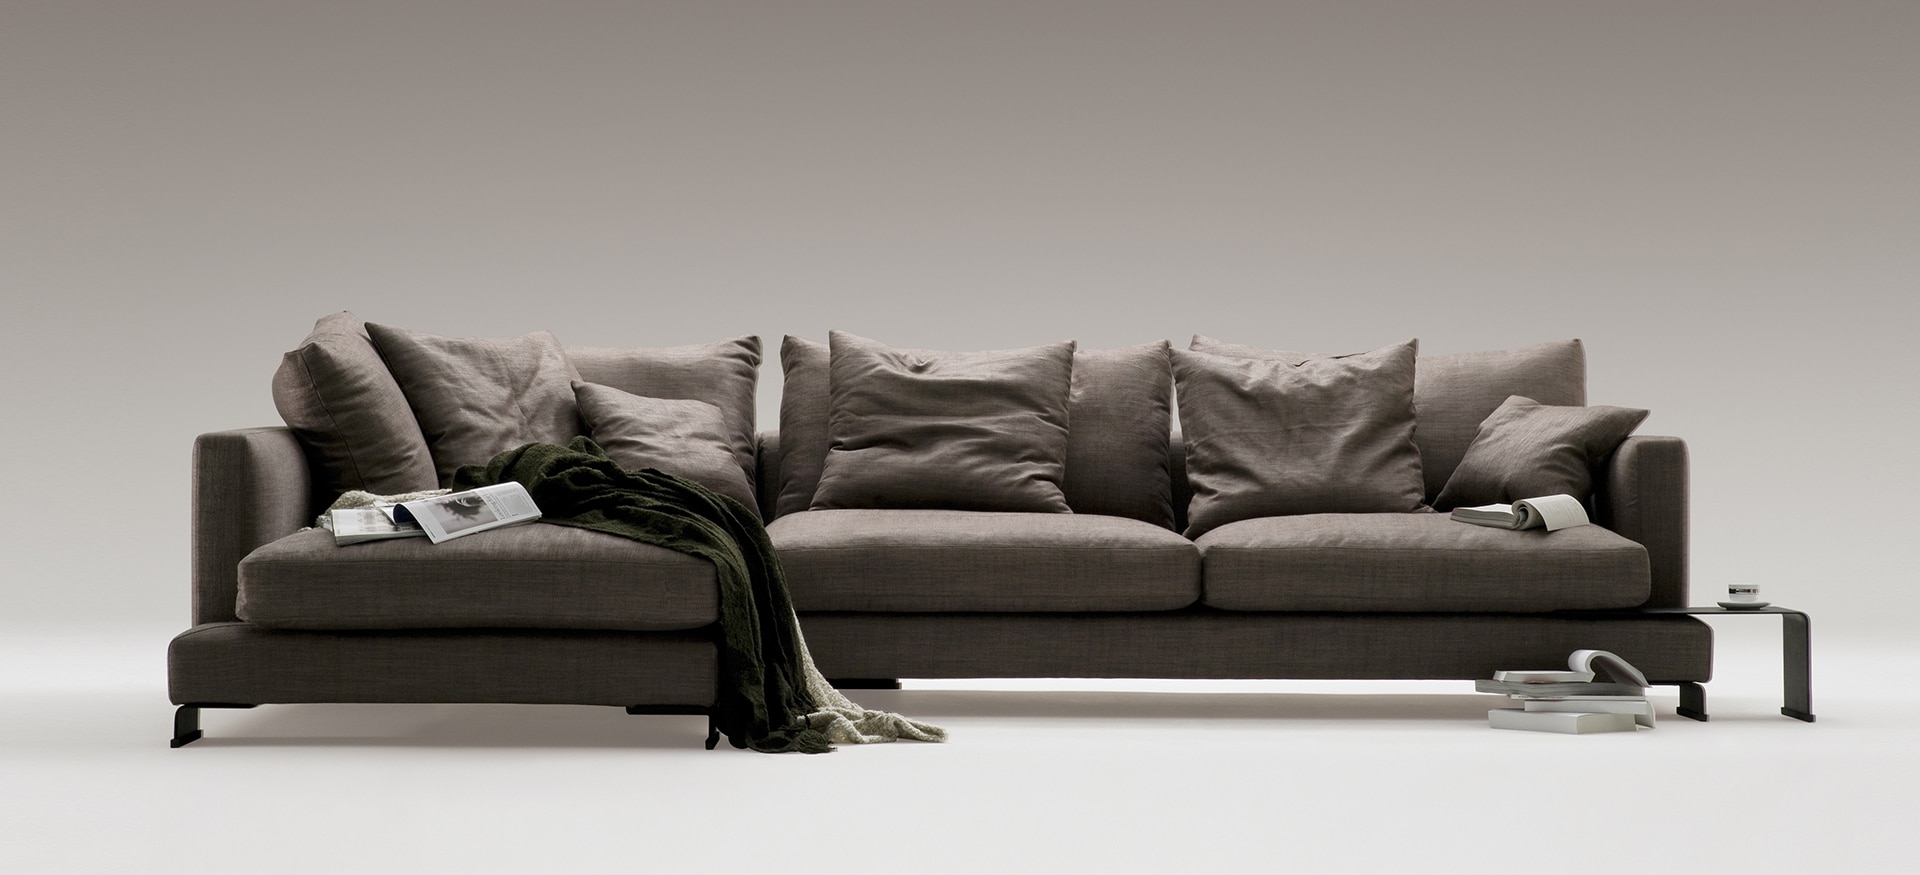 LazyTime Sofa